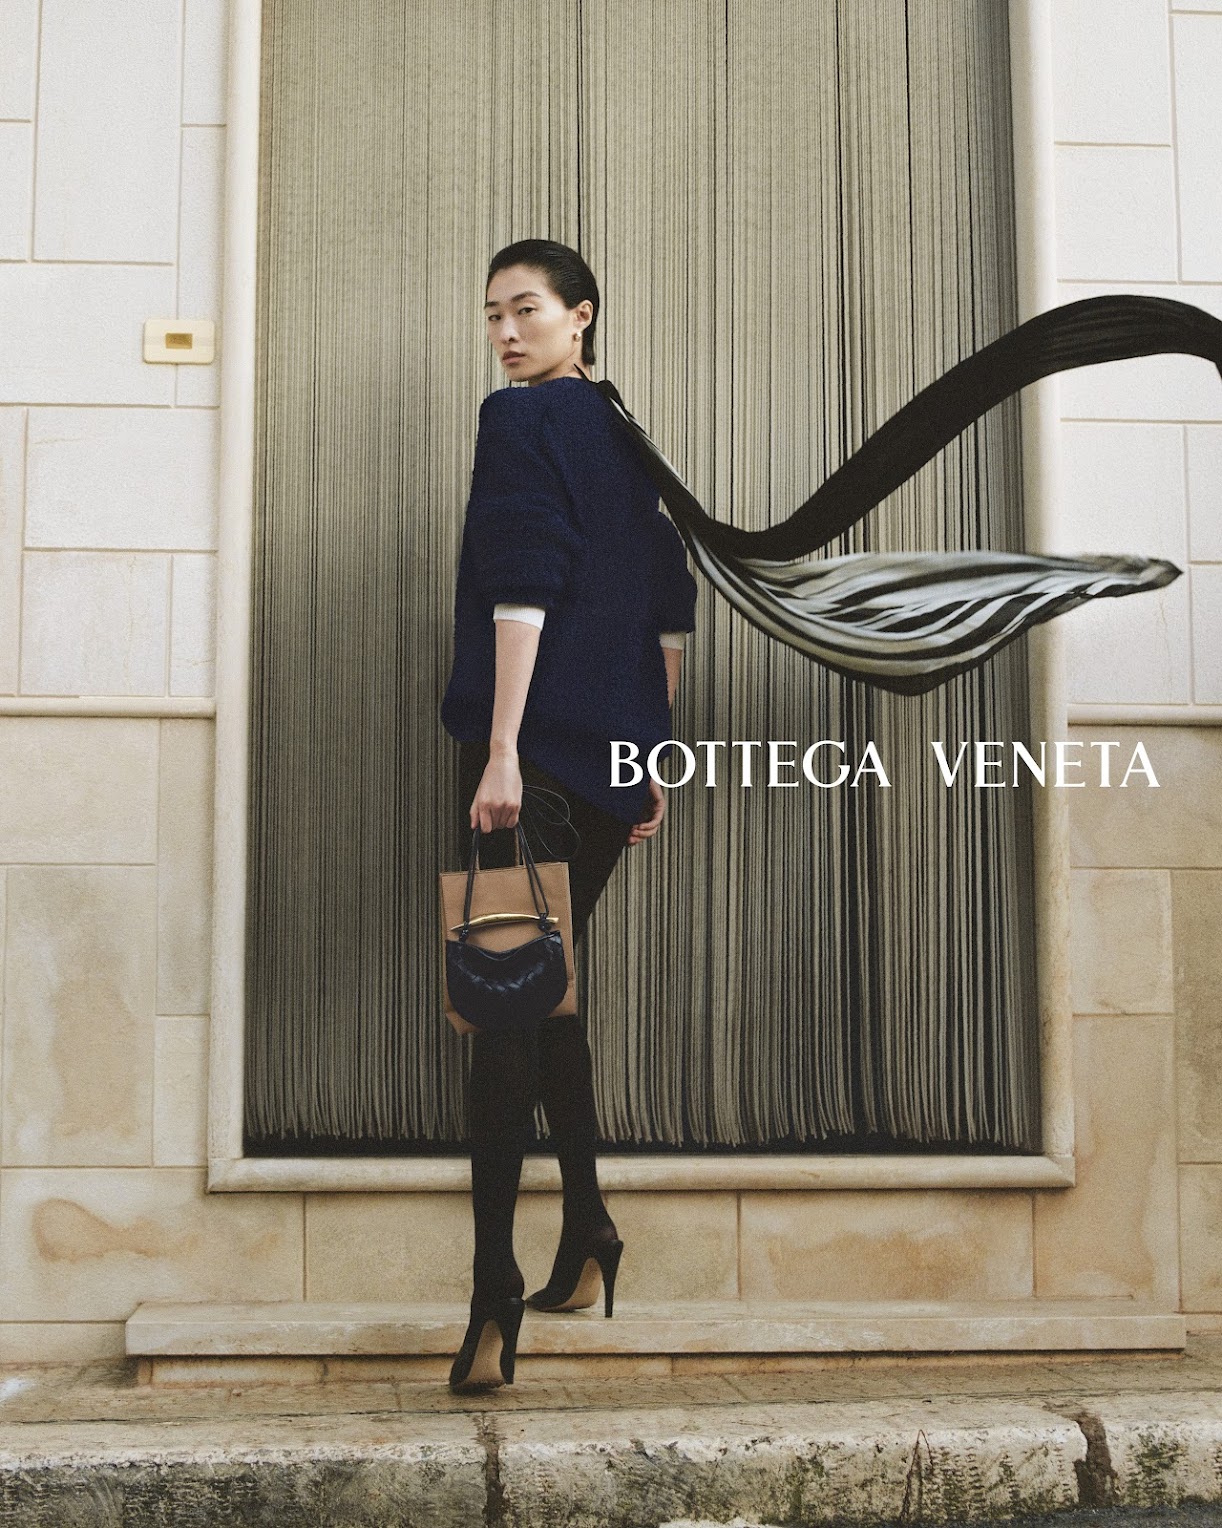 Let's Go with the Bottega Veneta Andiamo - PurseBlog in 2023